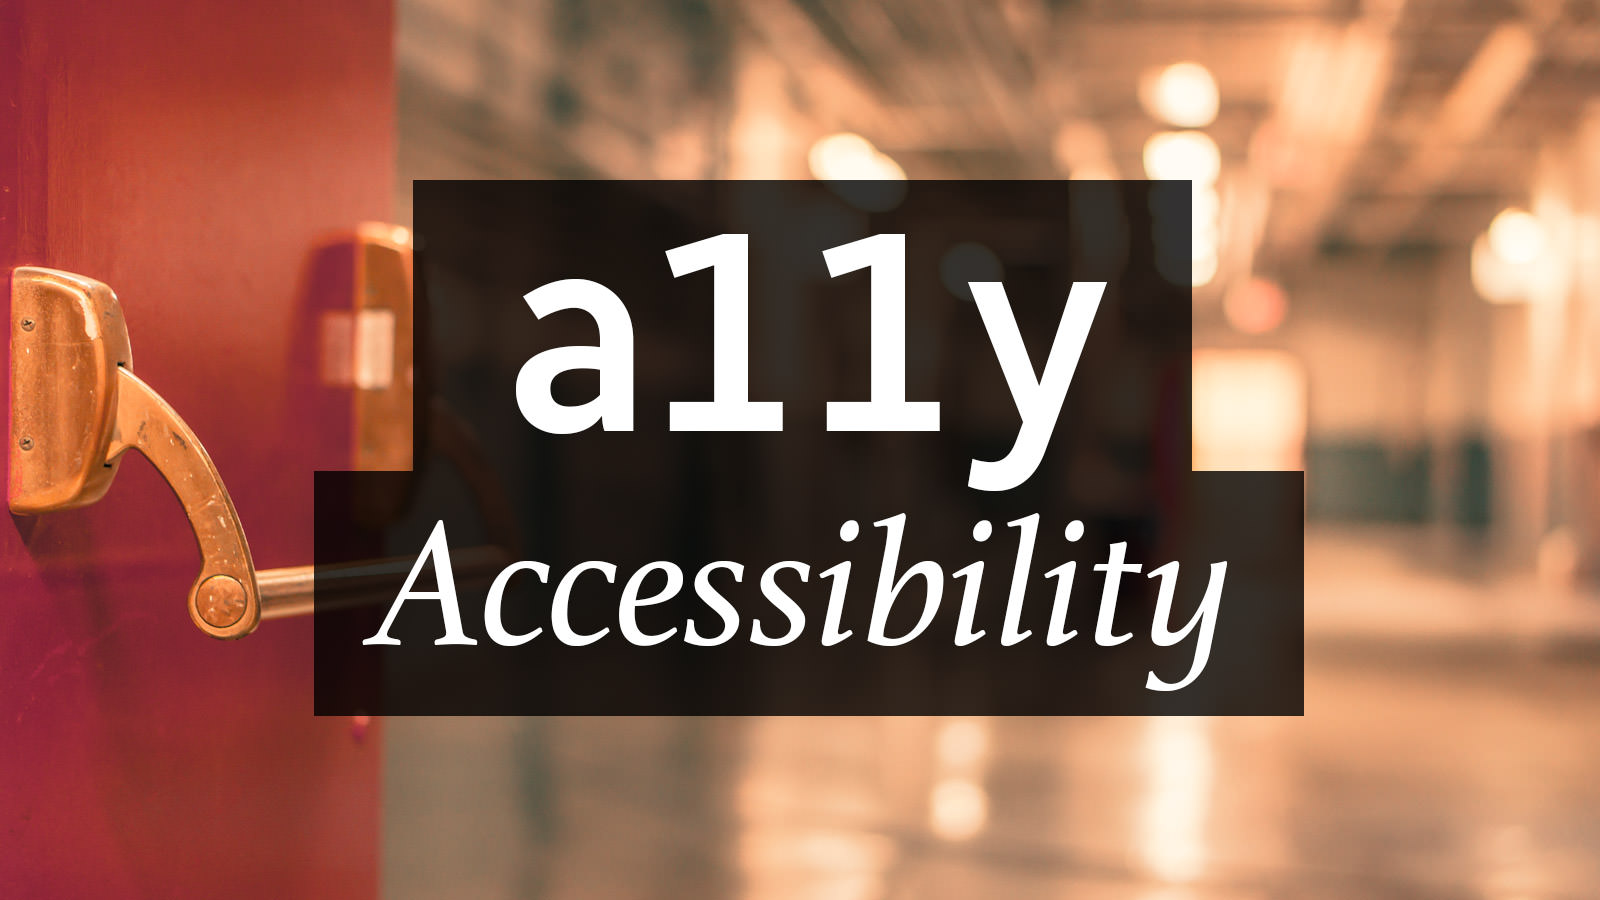 Numeronym for Accessibility